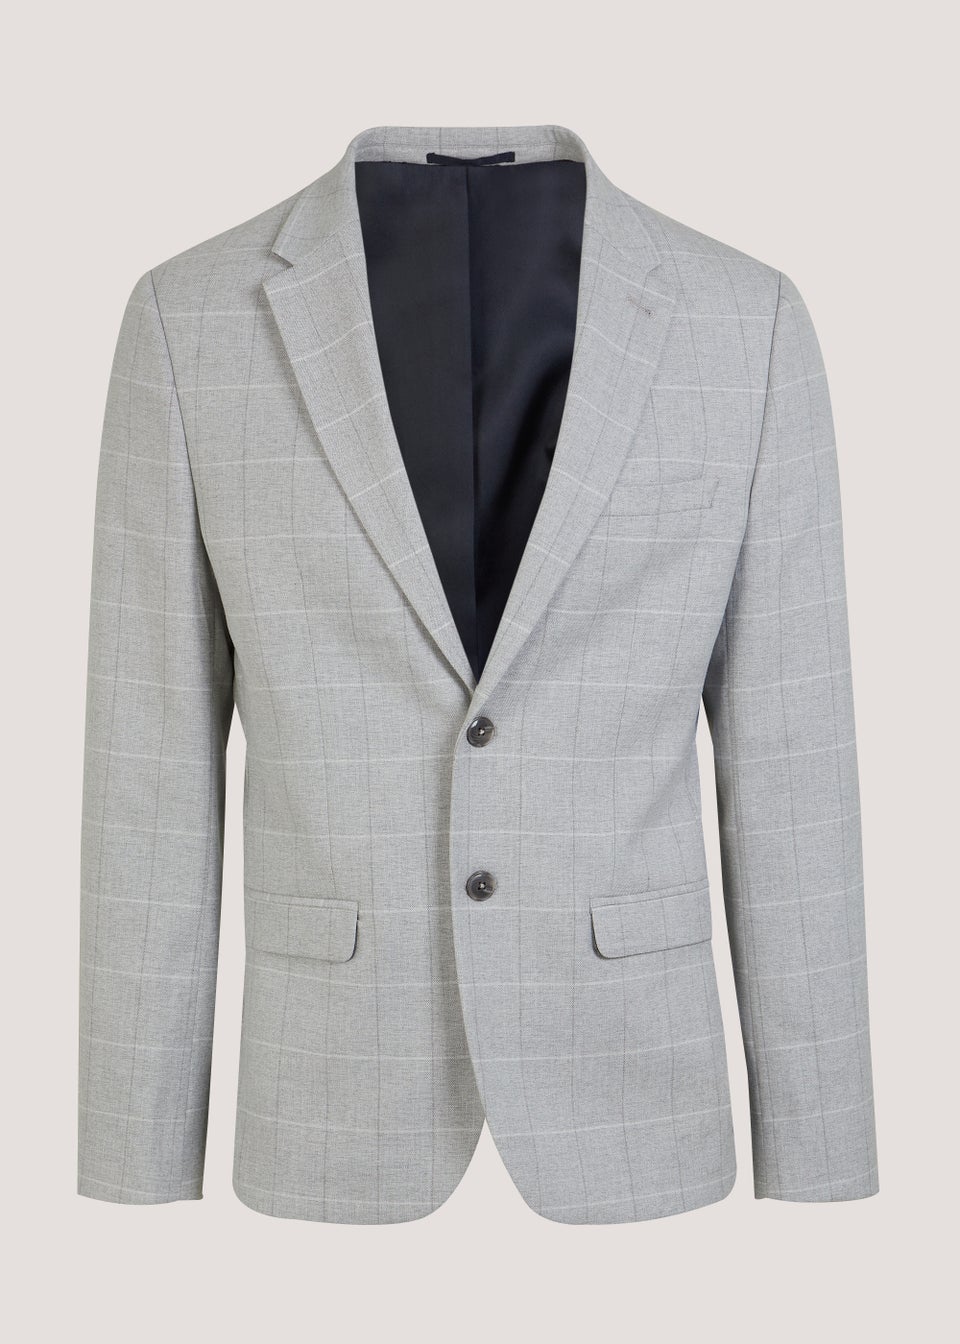 Taylor & Wright Grey Jackman Skinny Fit Suit Jacket - Matalan